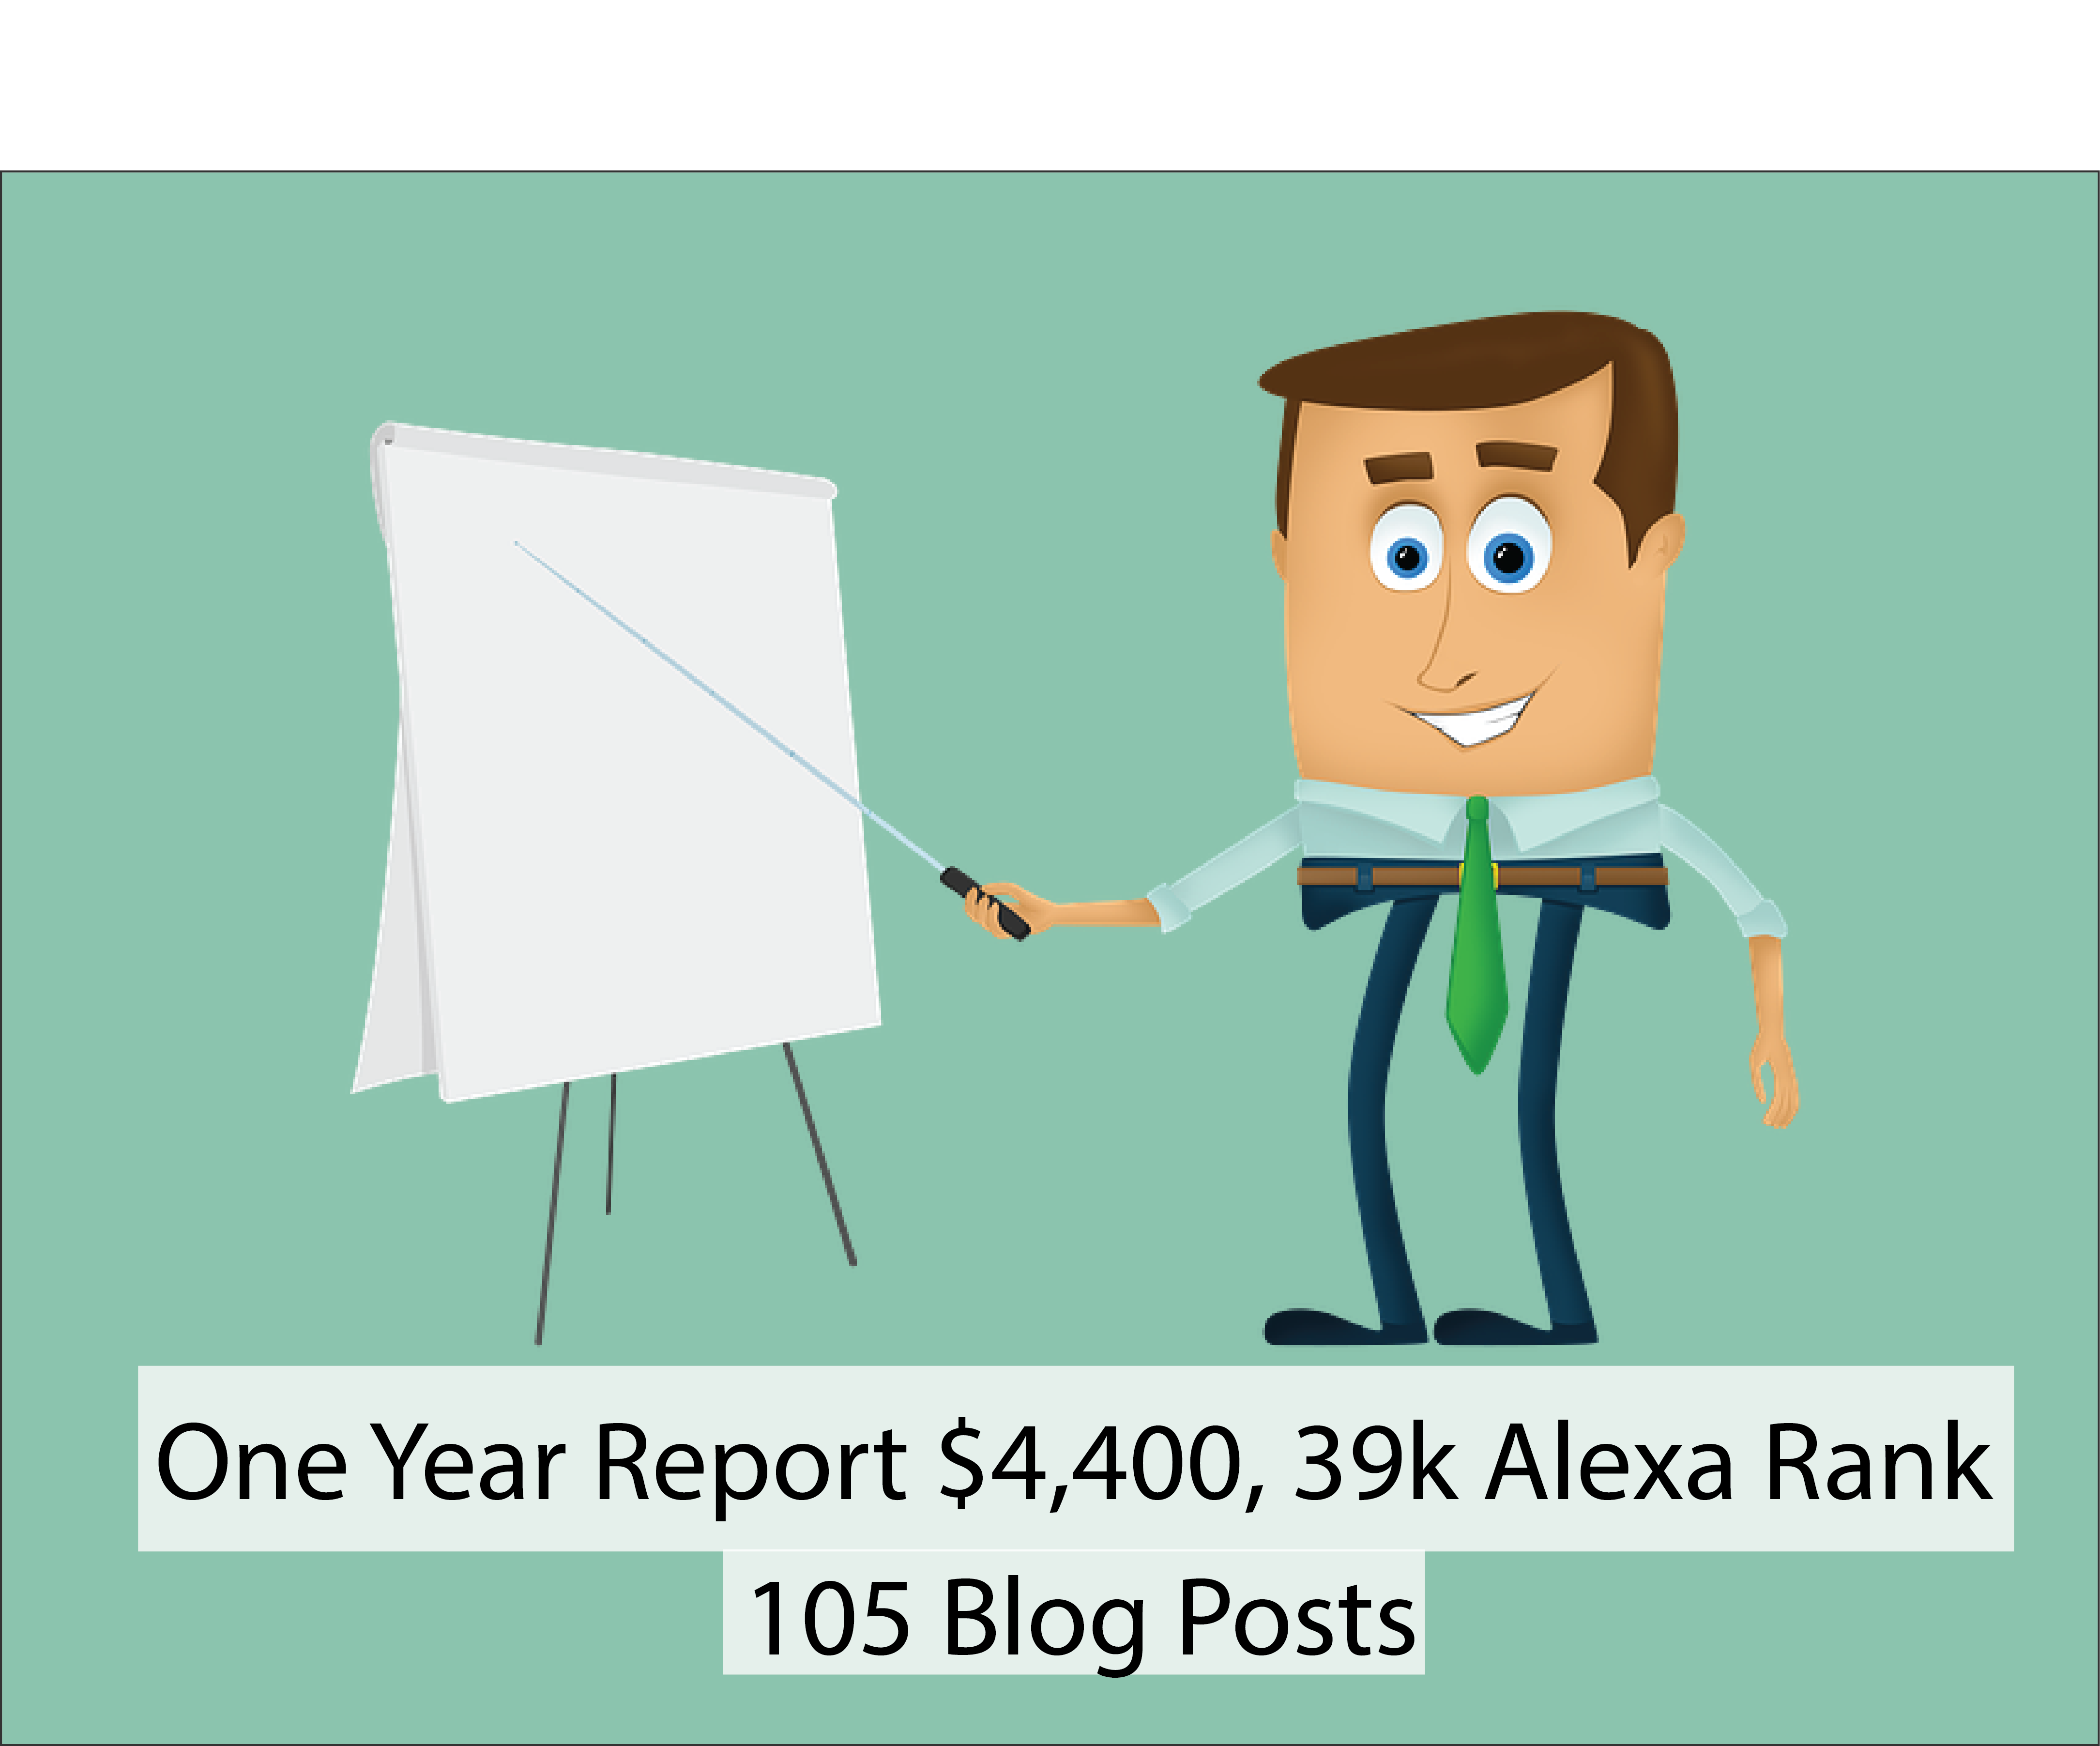 One Year Report! $4,400, 105 Blog Posts, 39k Alexa